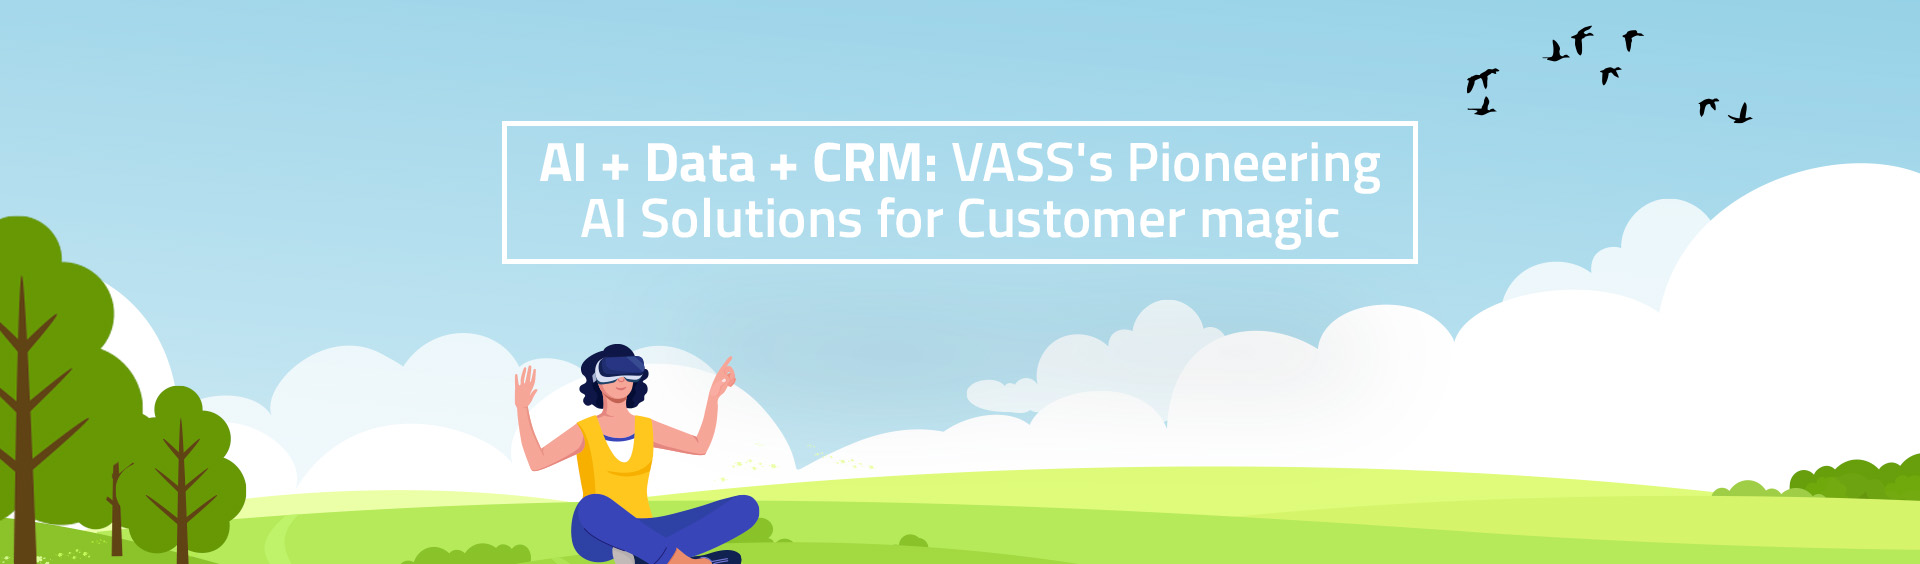 AI + Data + CRM: VASS’s Pioneering AI Solutions for Customer magic